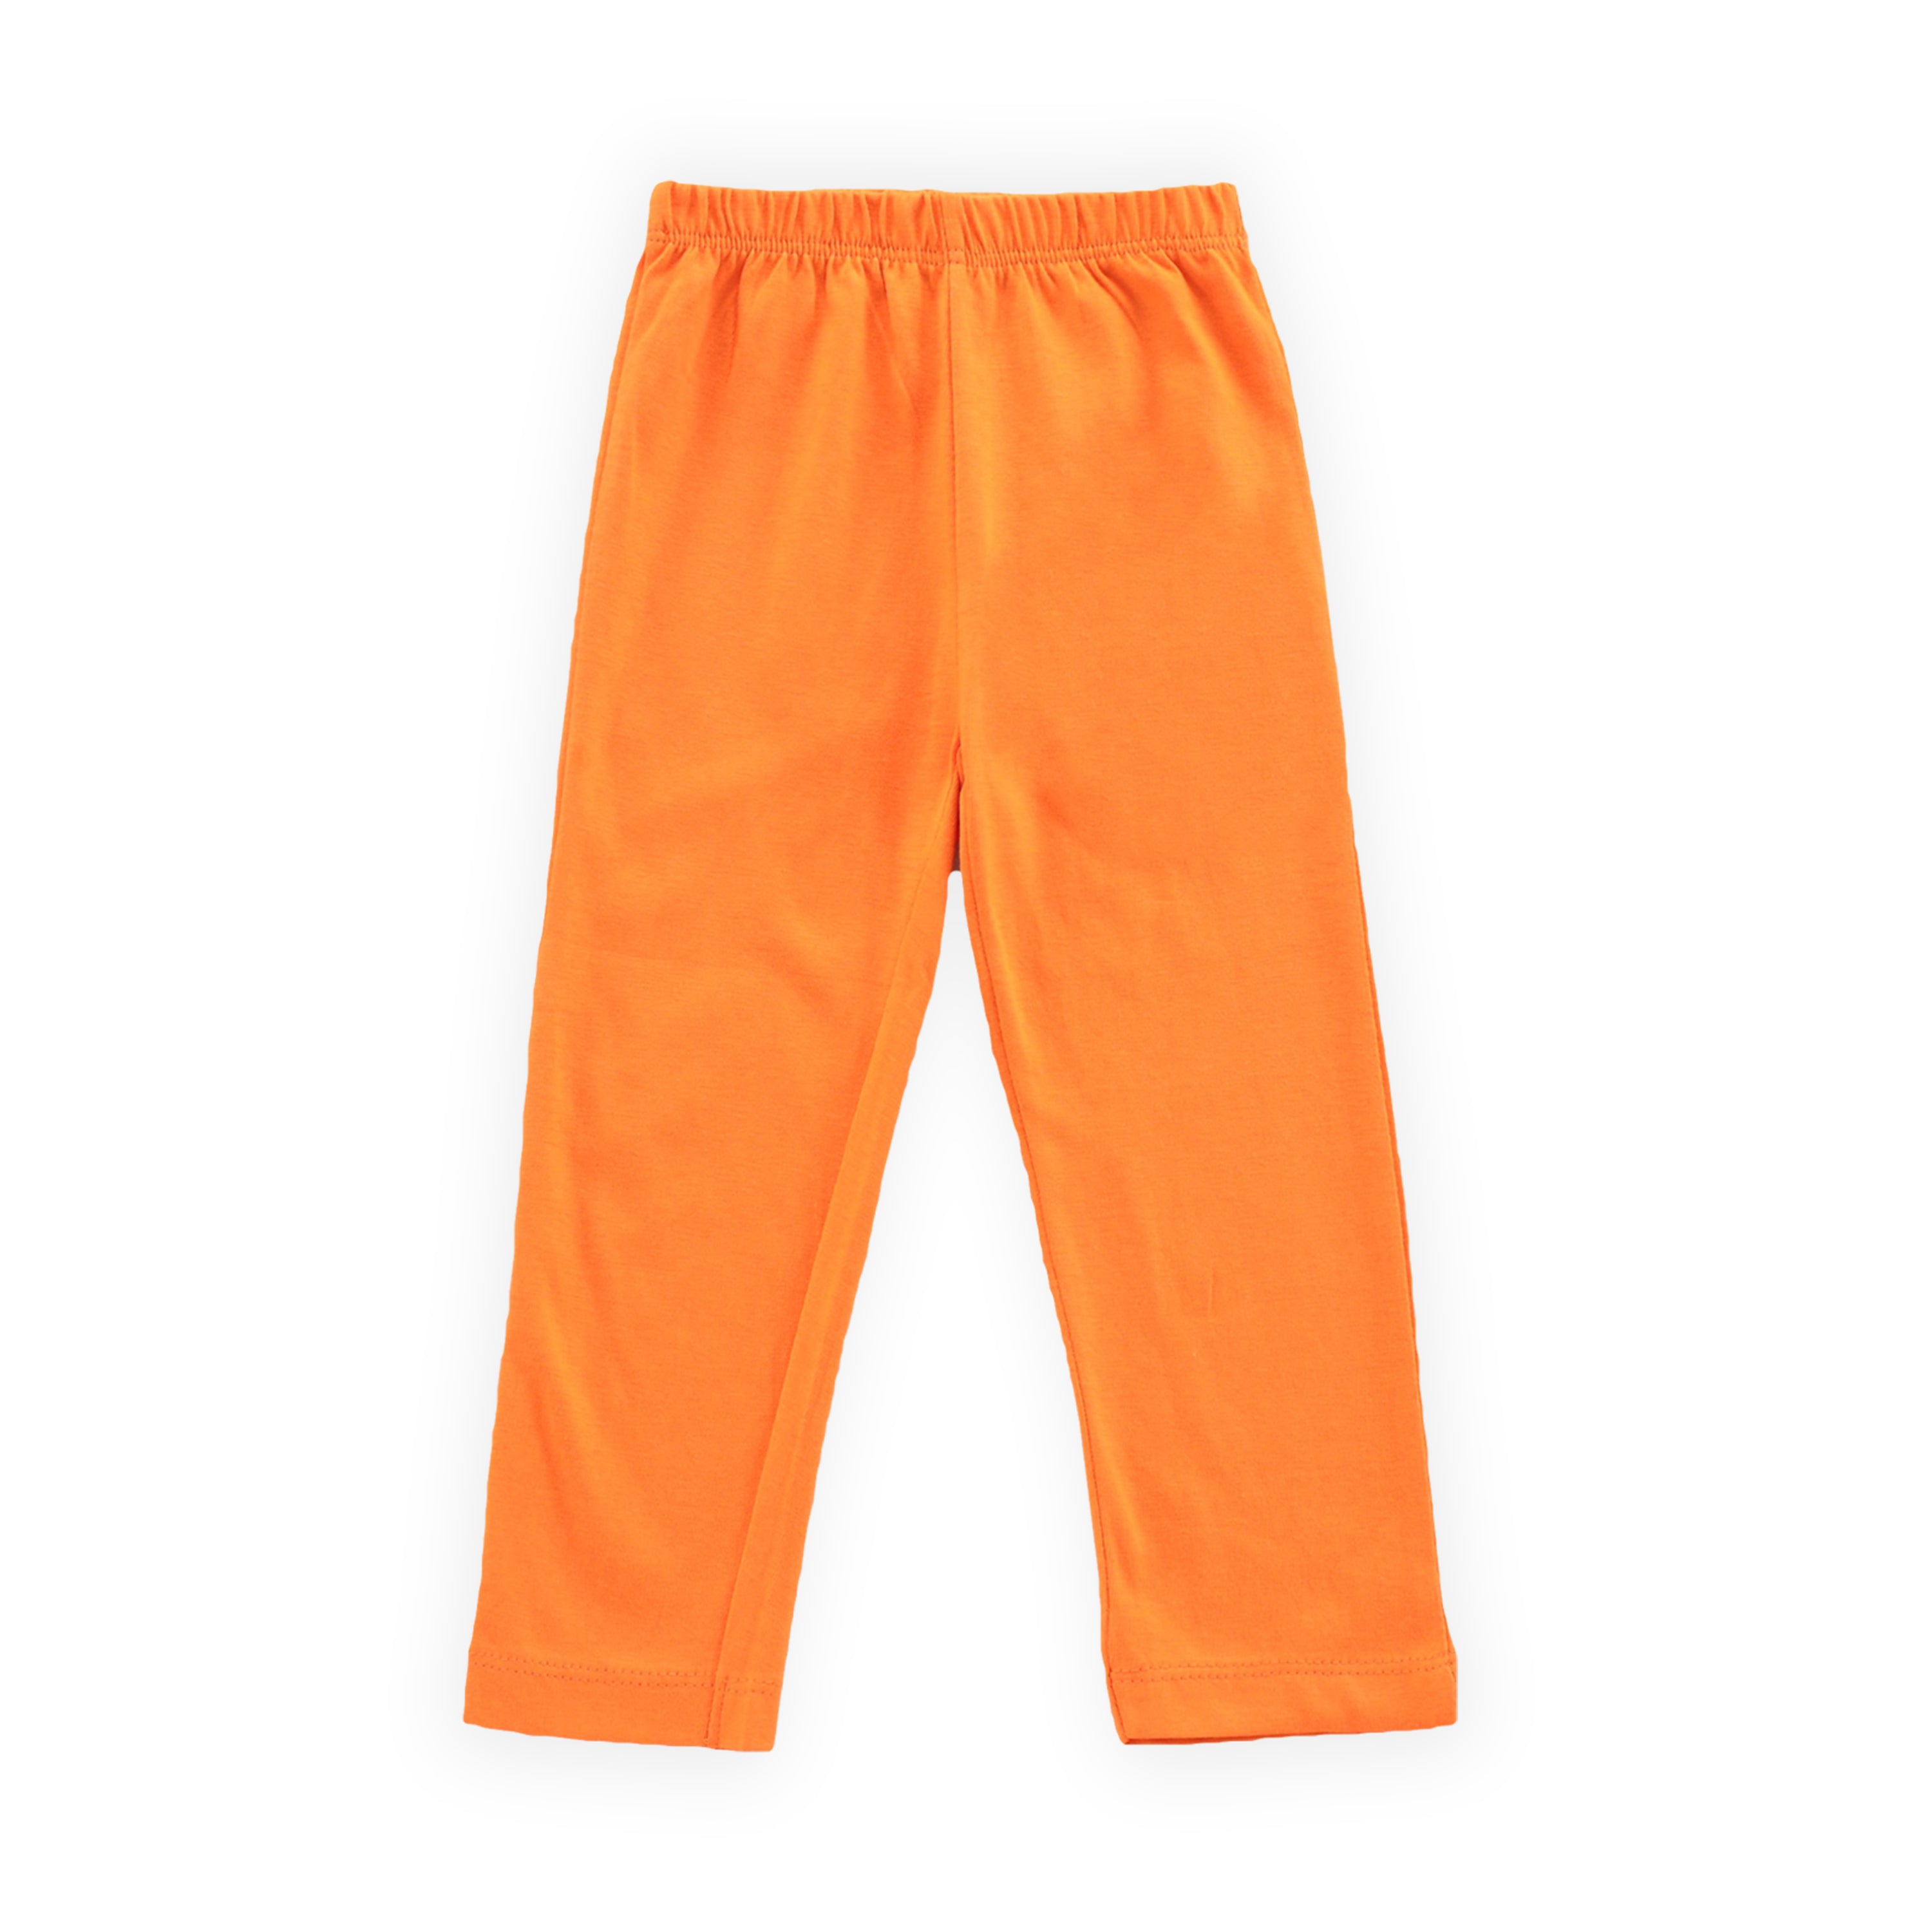 Kids Orange Solid Cotton Track pants